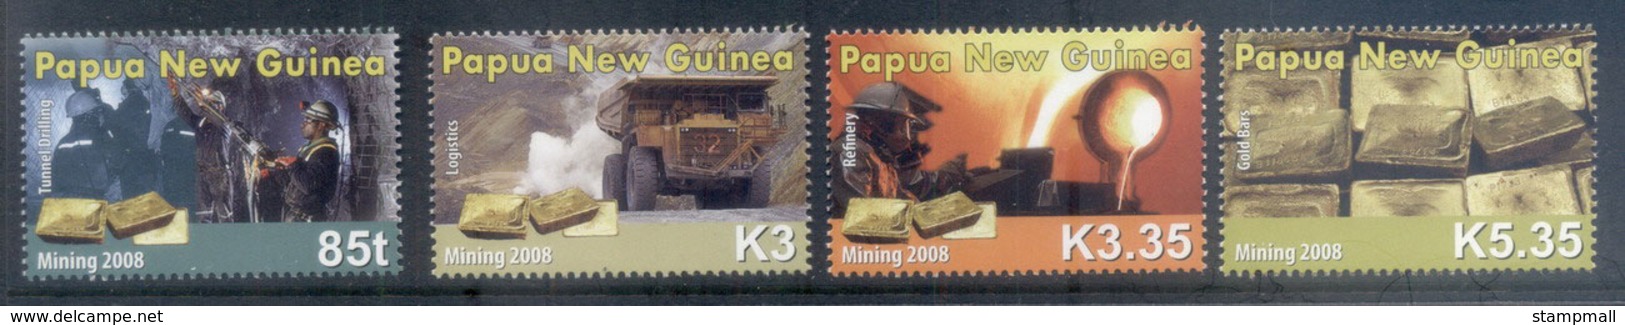 PNG 2008 Gold Mining MUH - Papua New Guinea